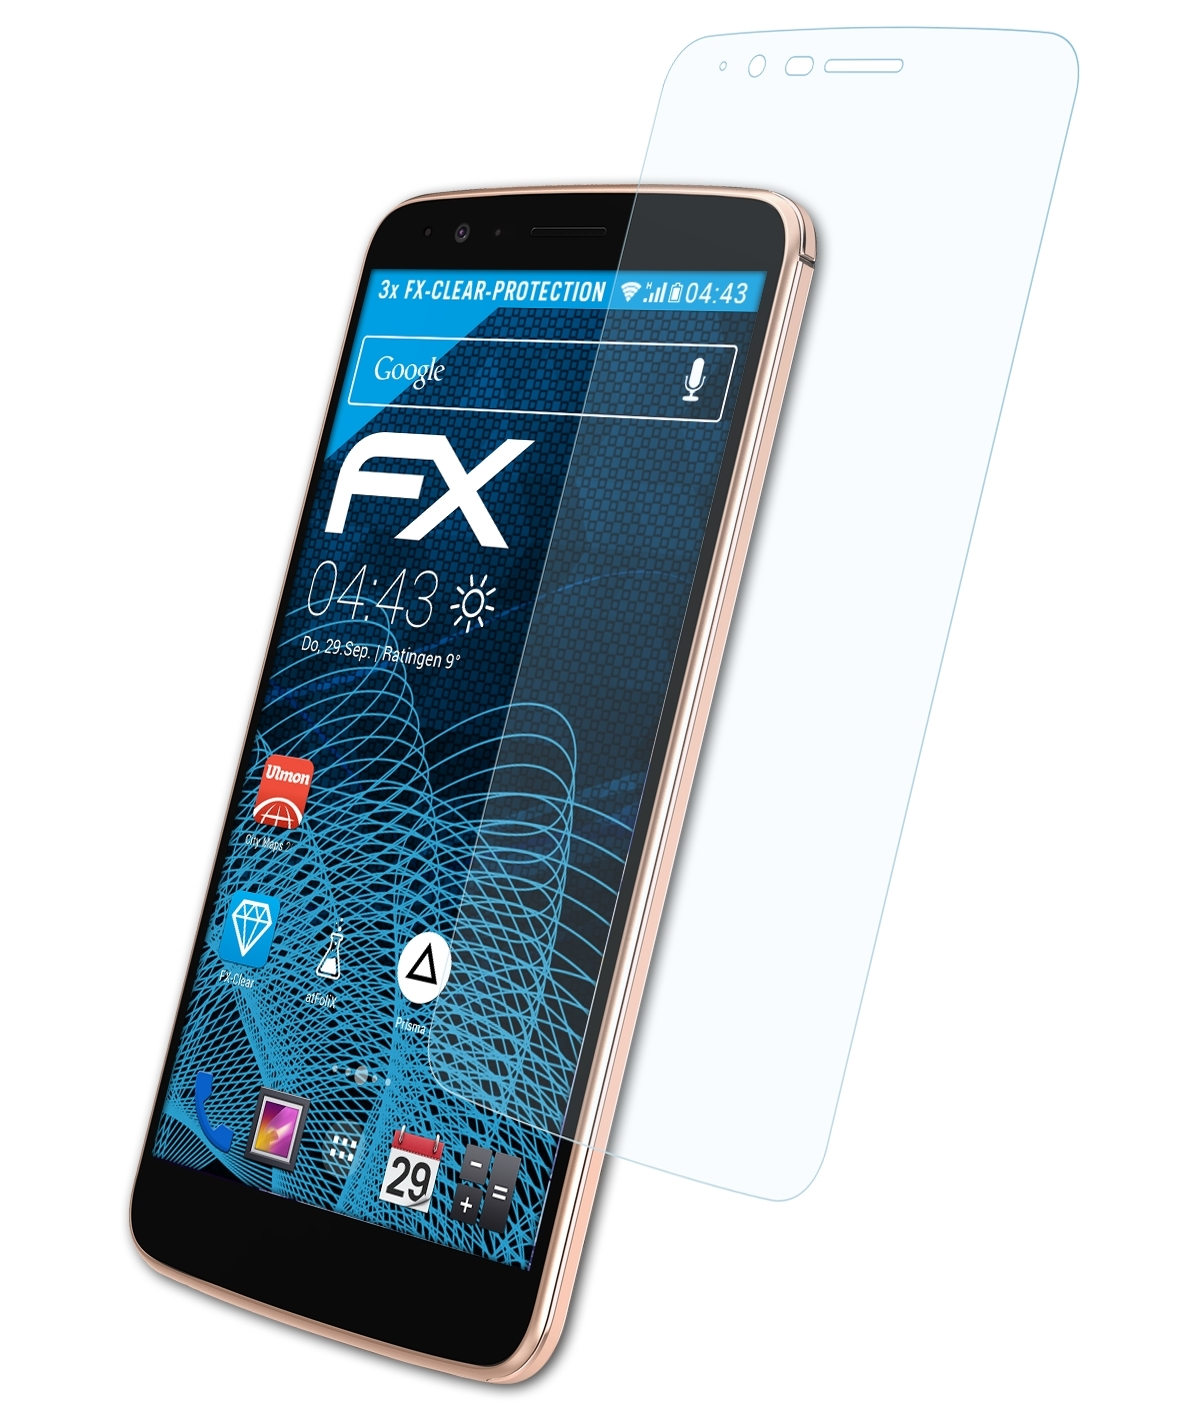 ATFOLIX 3x (LGM400DK)) FX-Clear Stylus 3 Displayschutz(für LG